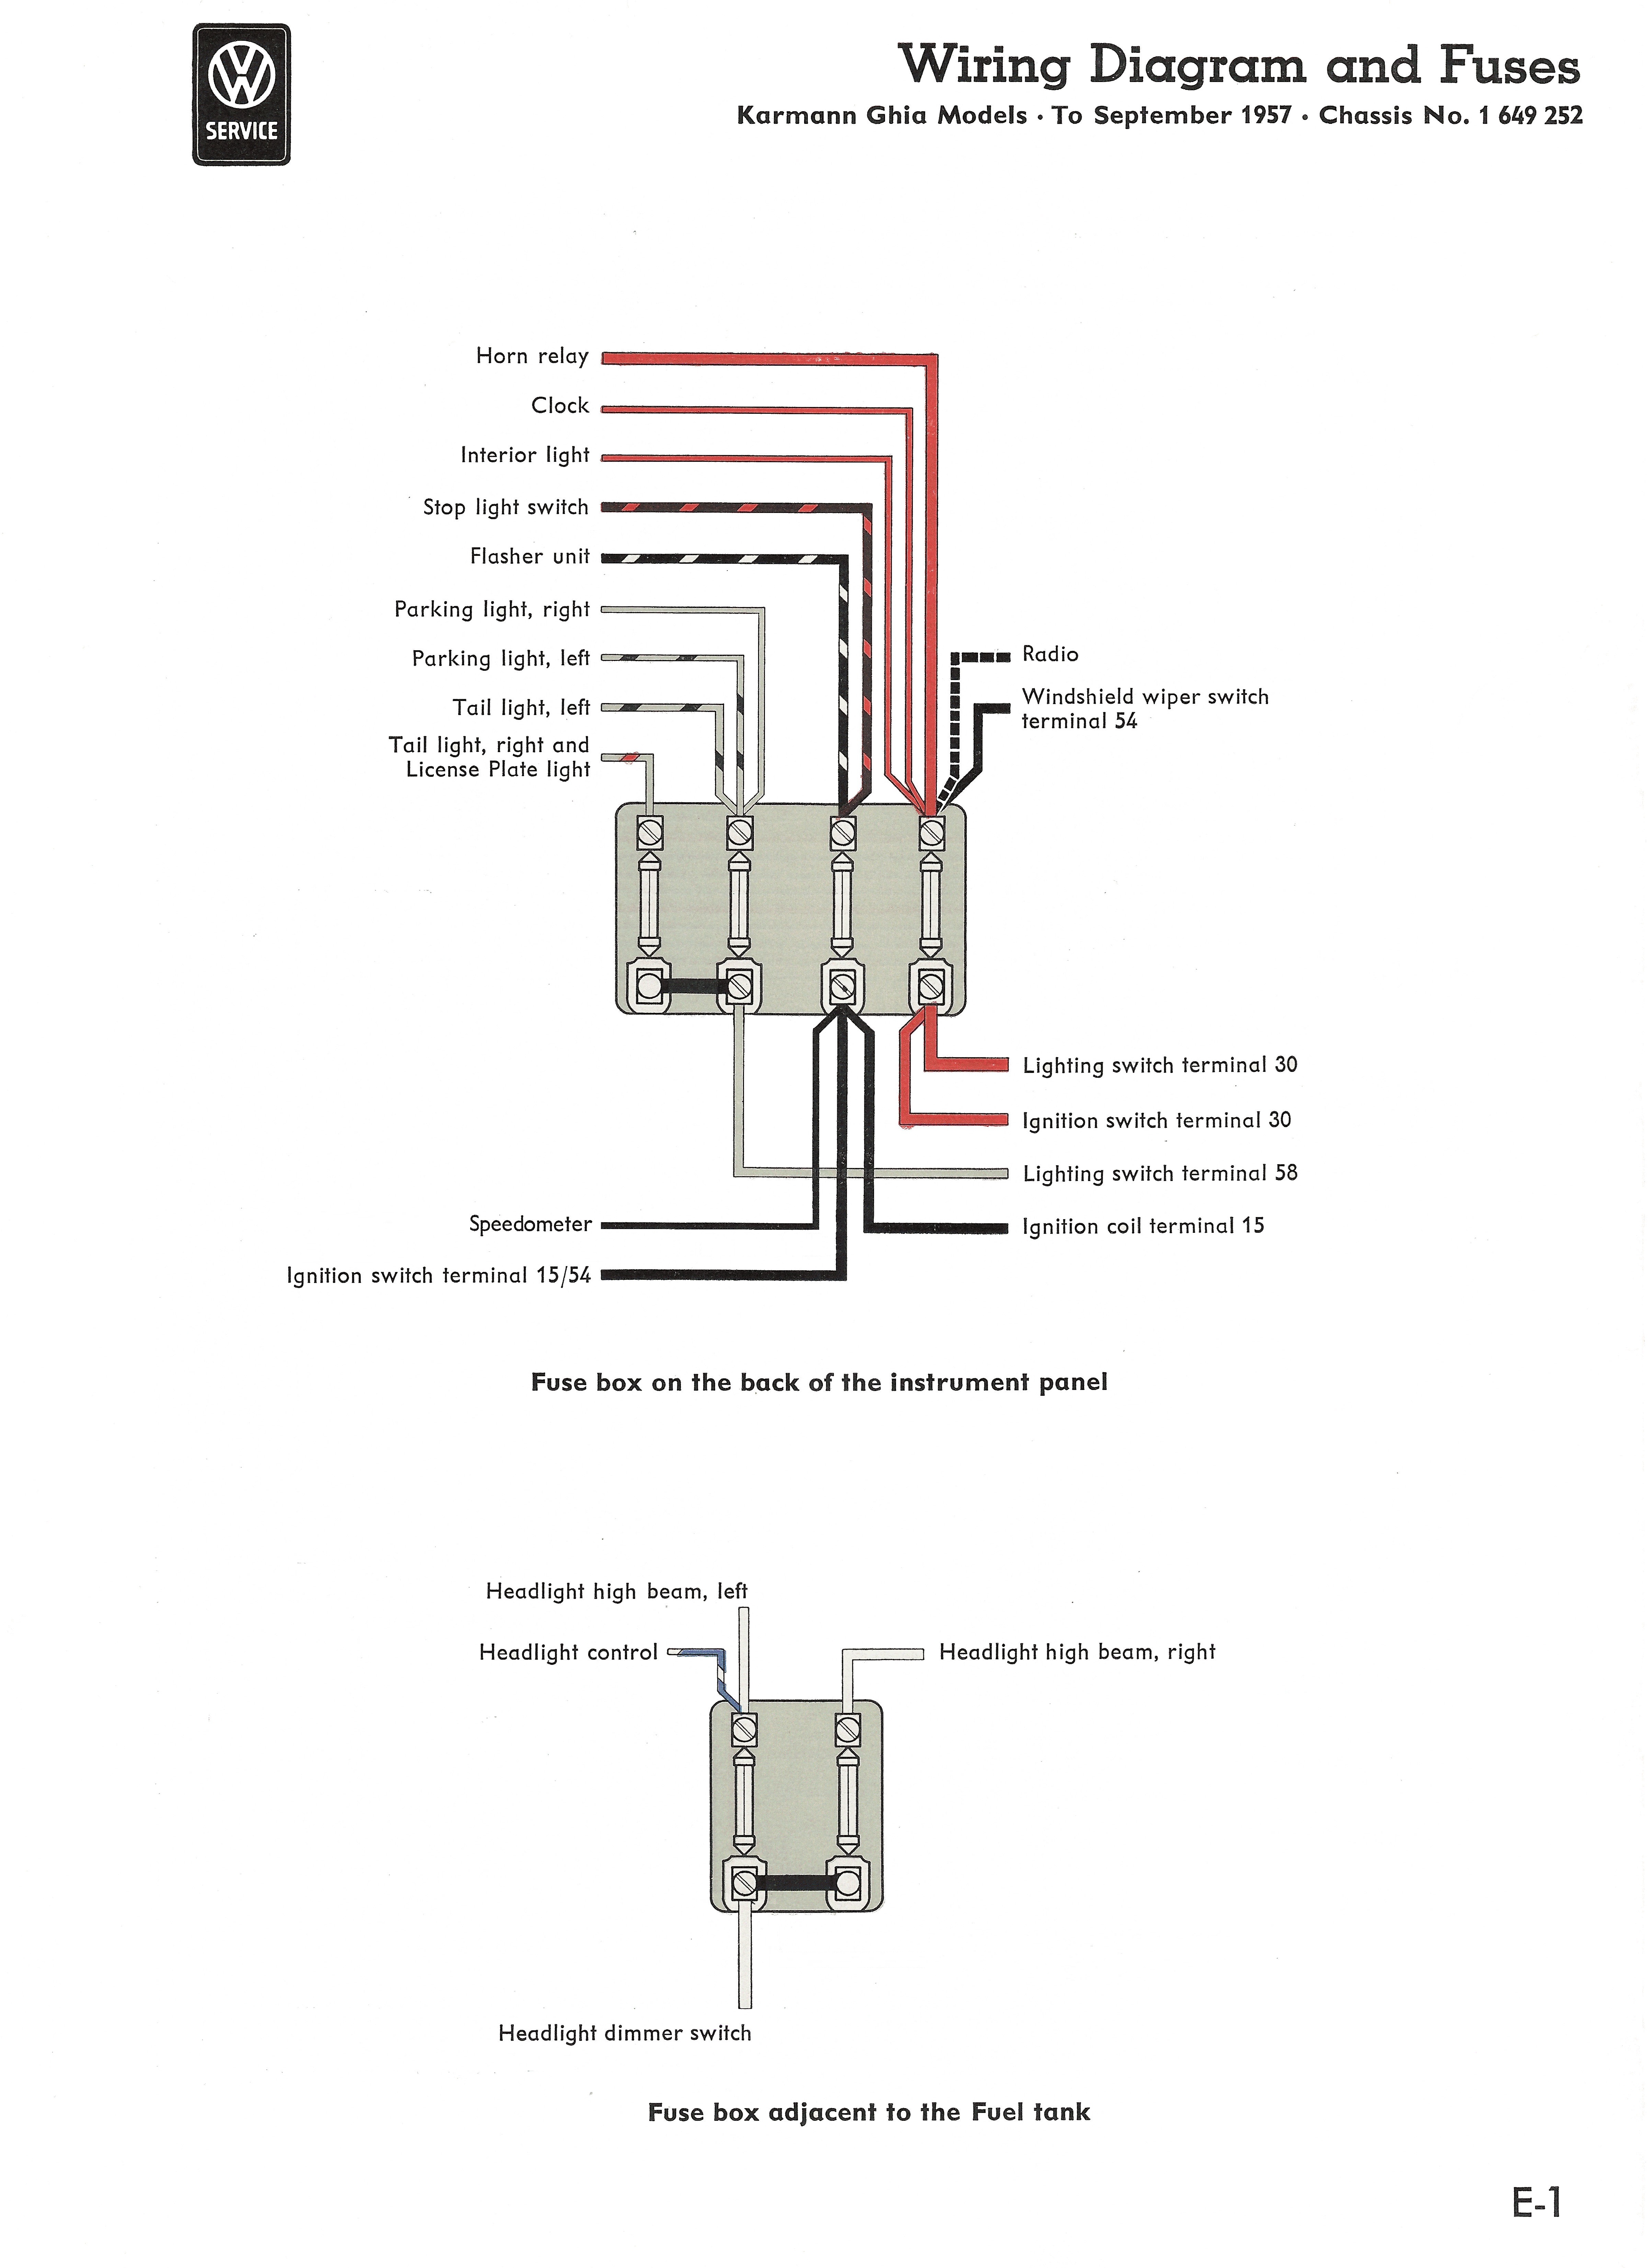 TheSamba.com :: Karmann Ghia Wiring Diagrams wiring diagrams 74 nova 